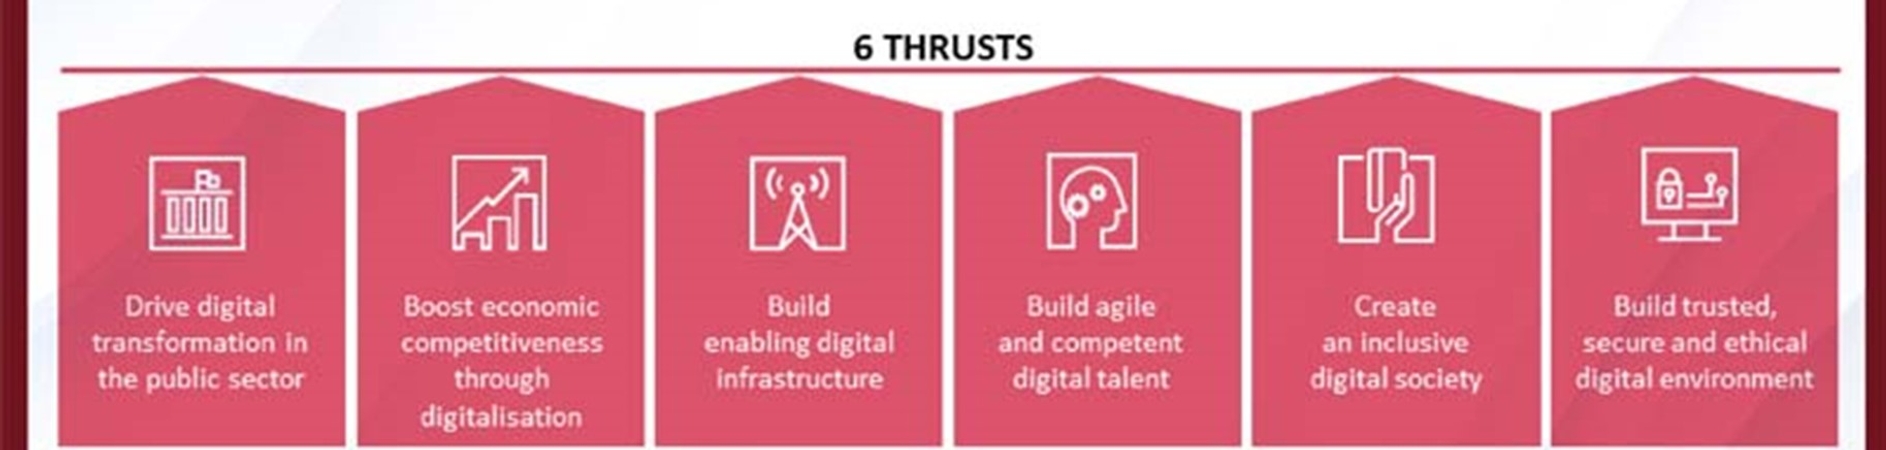 Image: The 6 Thrusts of the Malaysia Digital Economy Blueprint